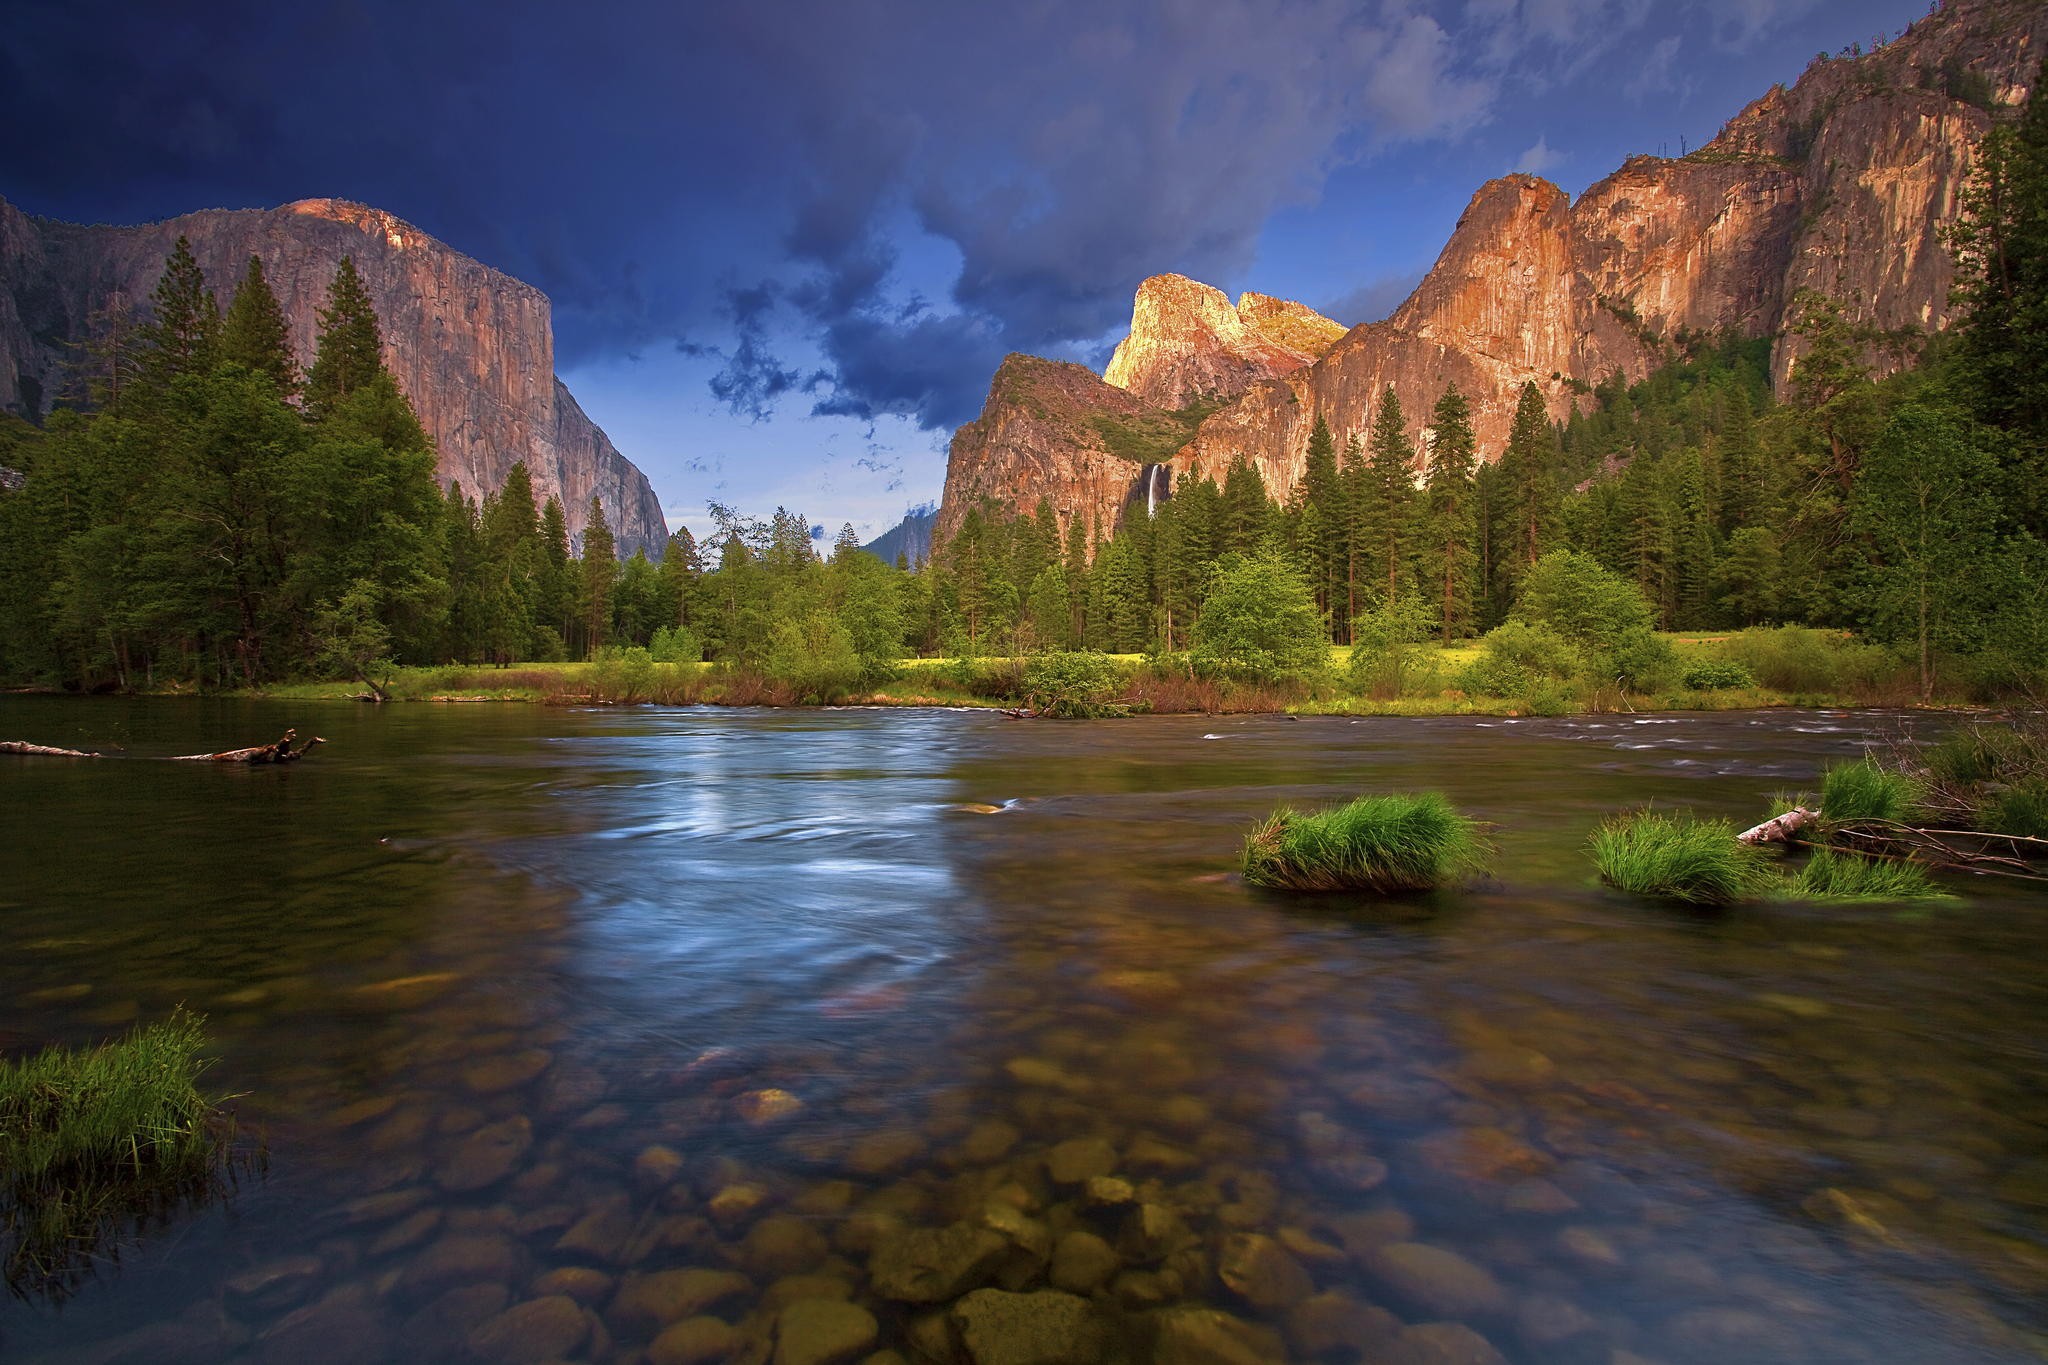 General 2048x1365 landscape nature rocks river pine trees mountains USA California Yosemite National Park